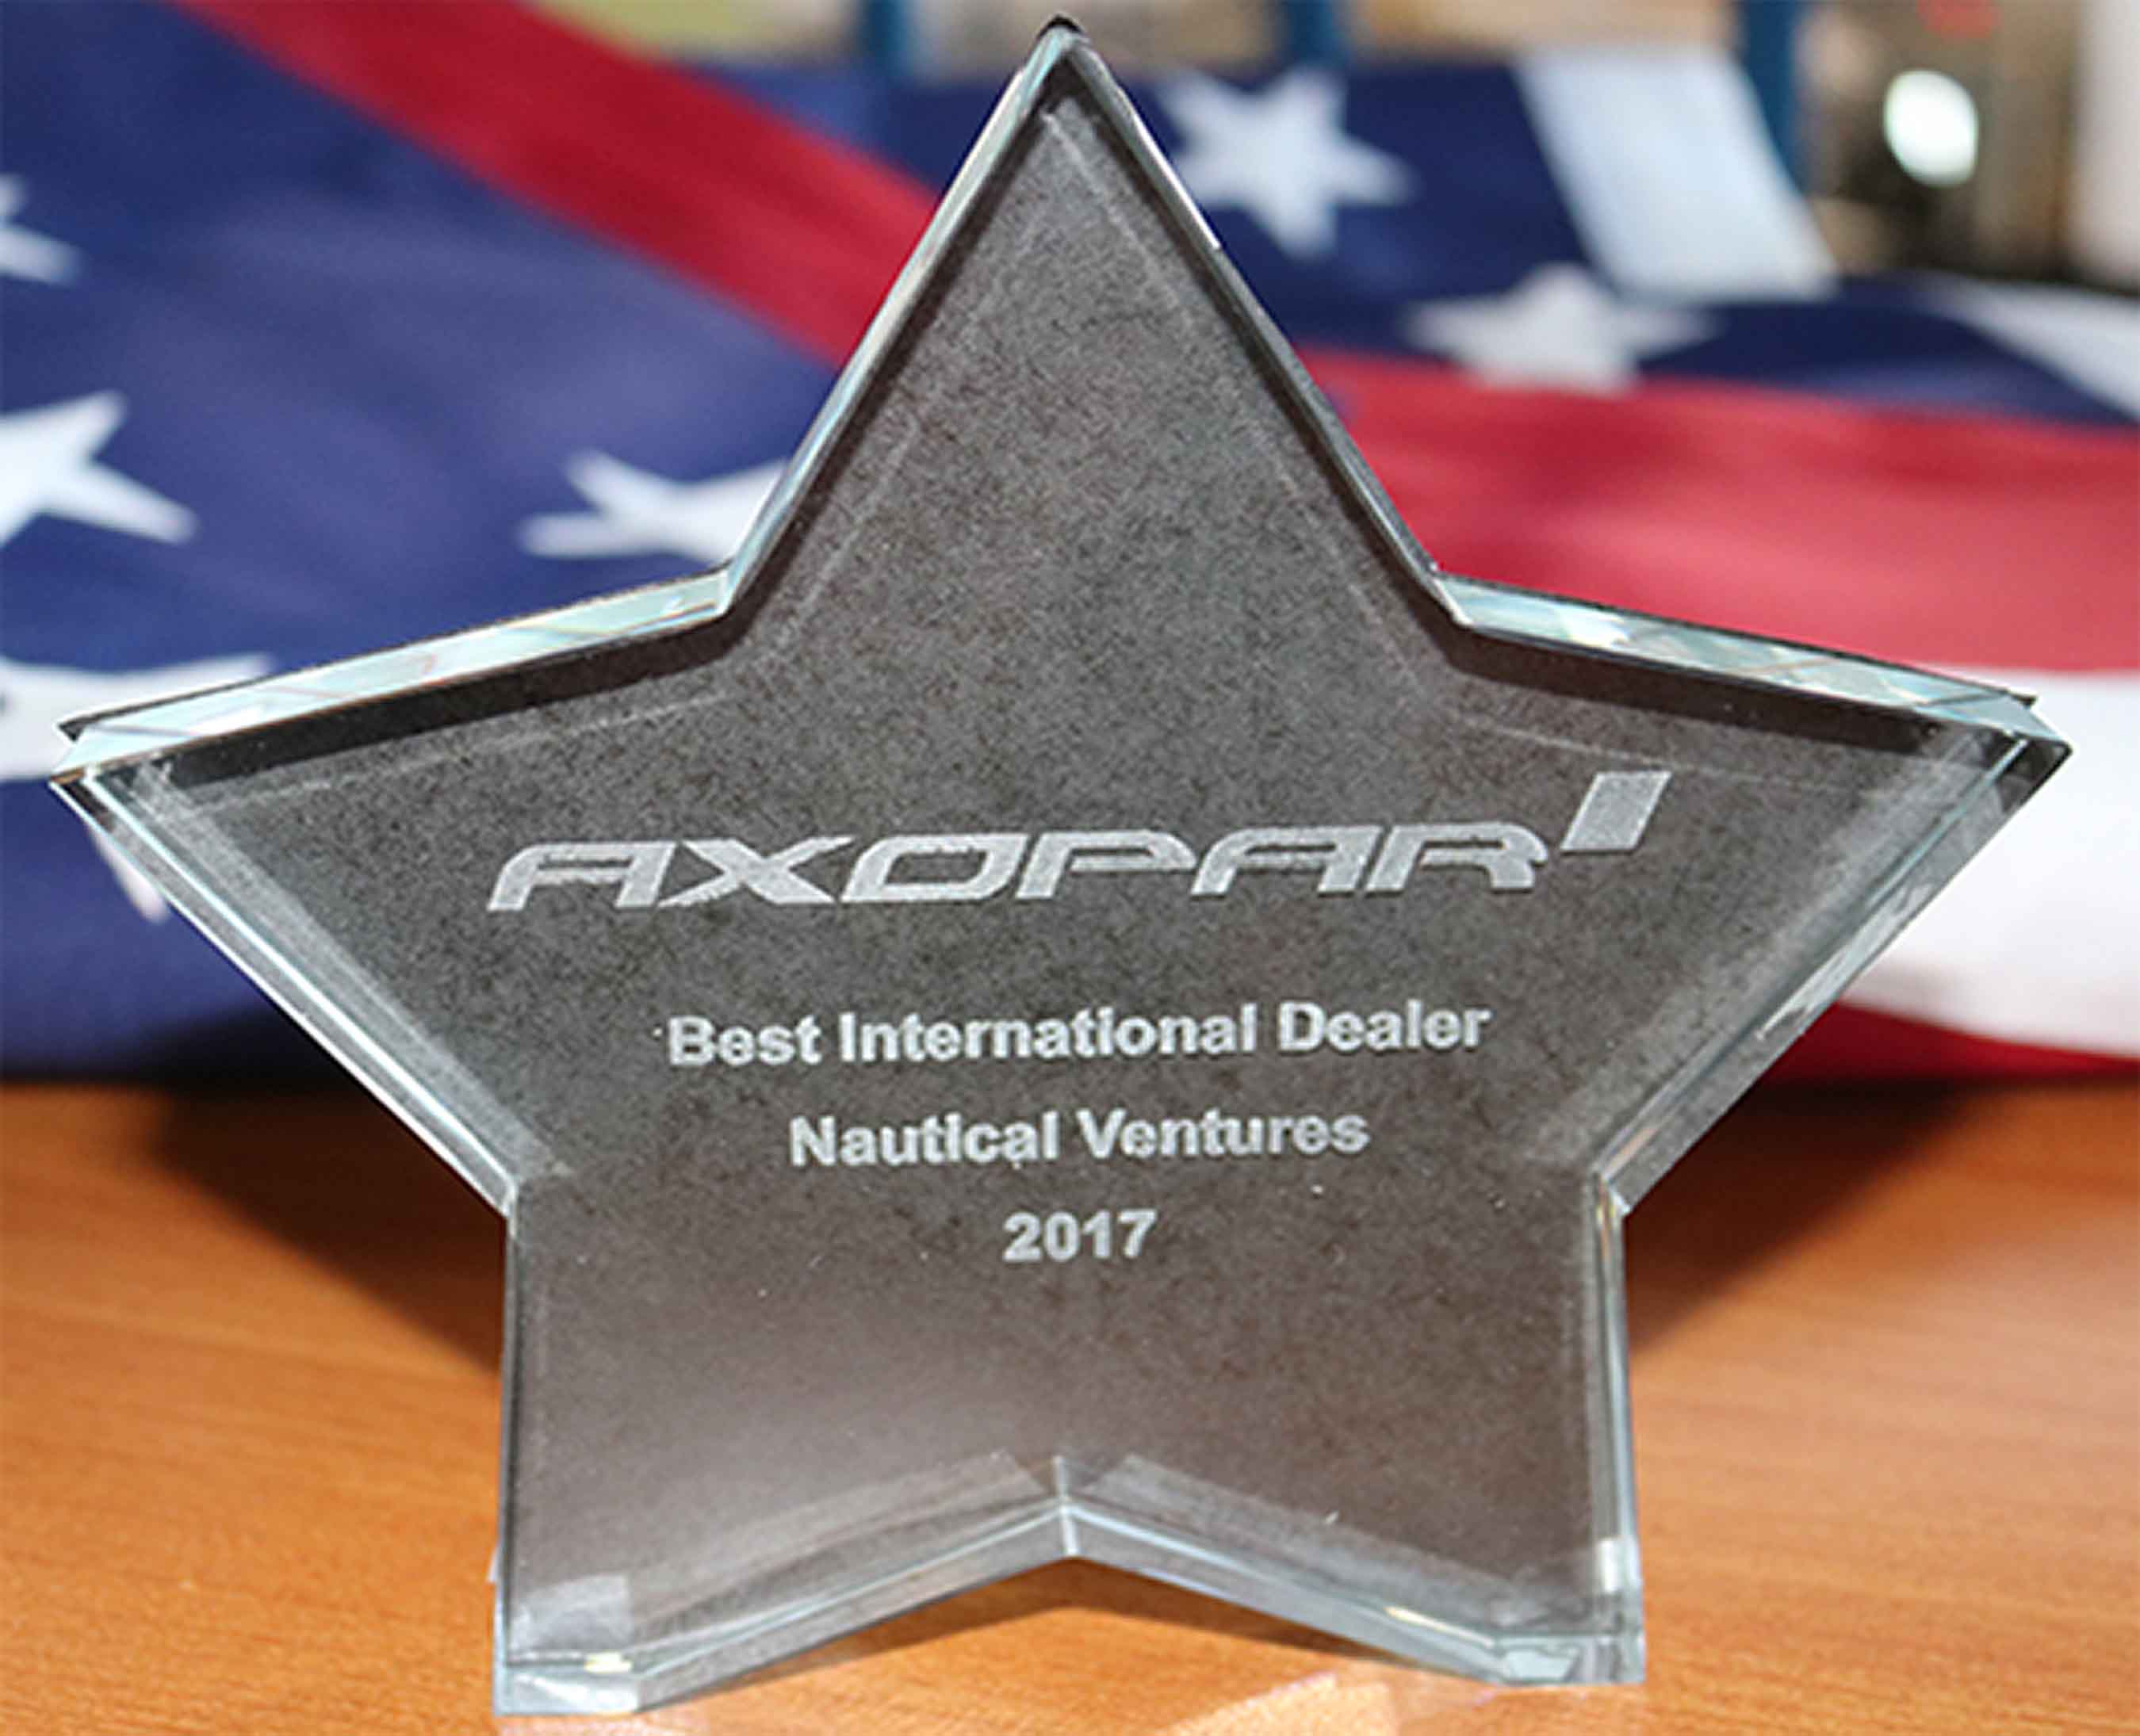 Nautical Ventures Wins International Dealer of the Year Award from Axopar Boats on Finland.